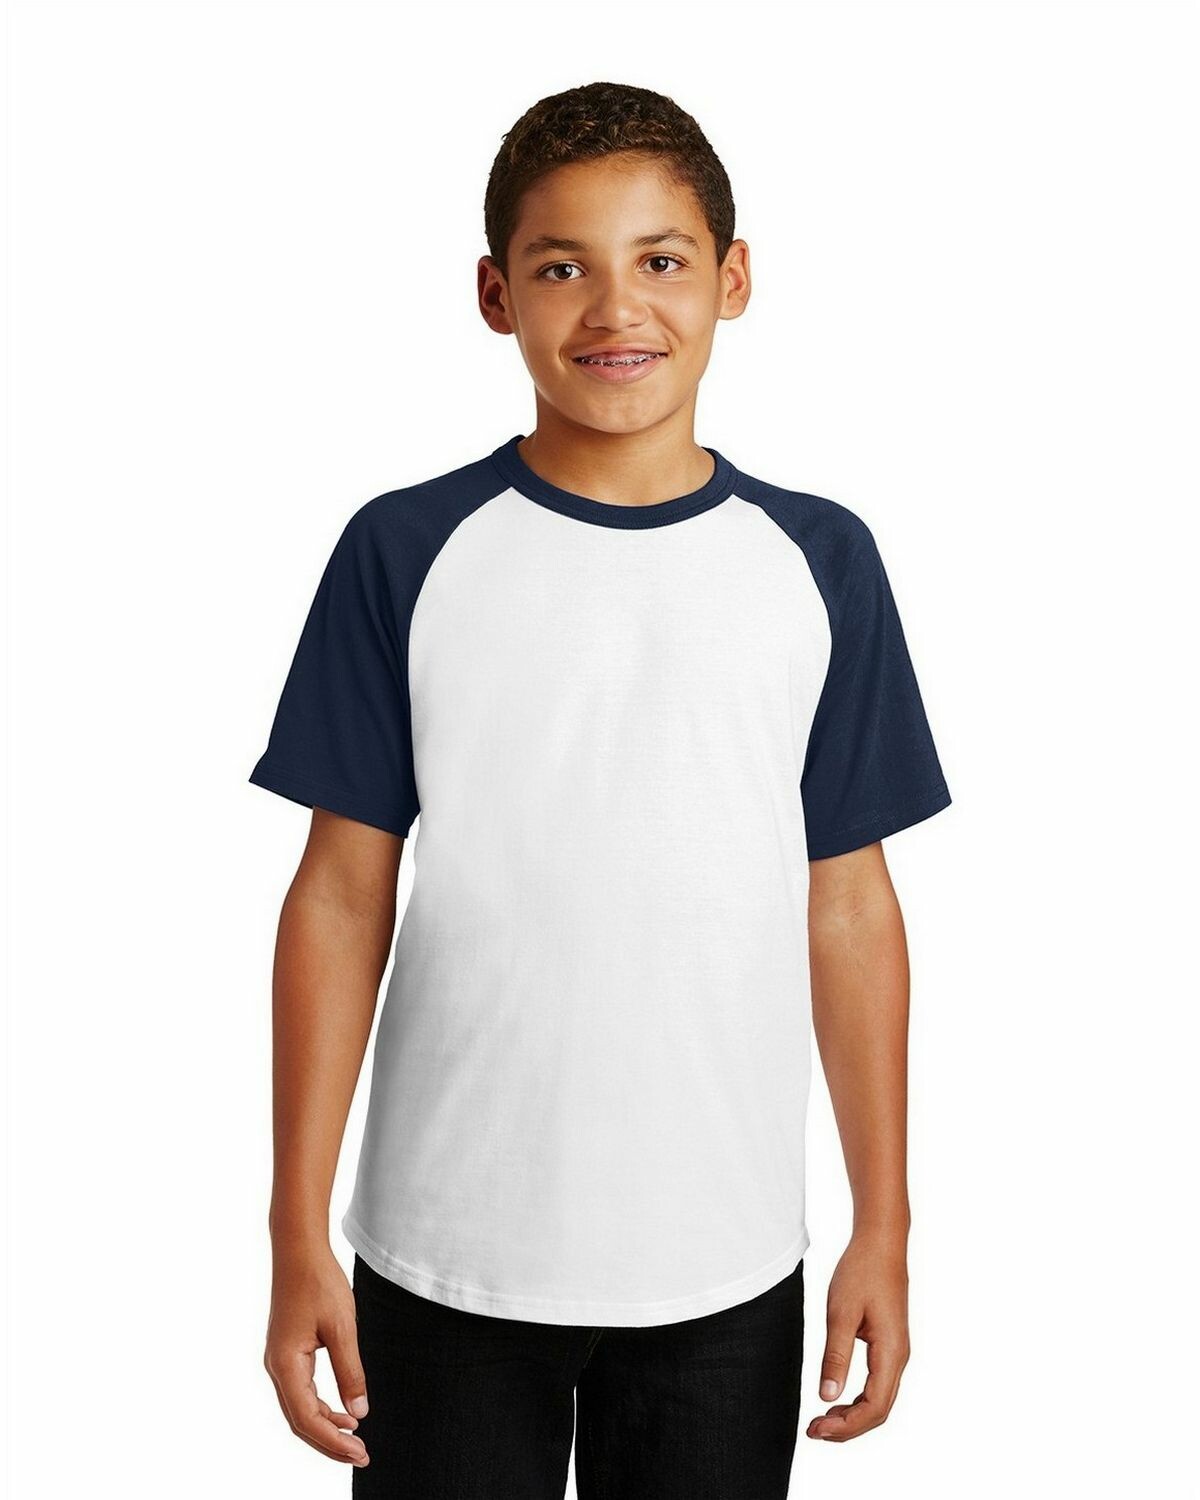 Augusta Sportswear 4421 - Youth Three-Quarter Sleeve Baseball Jersey